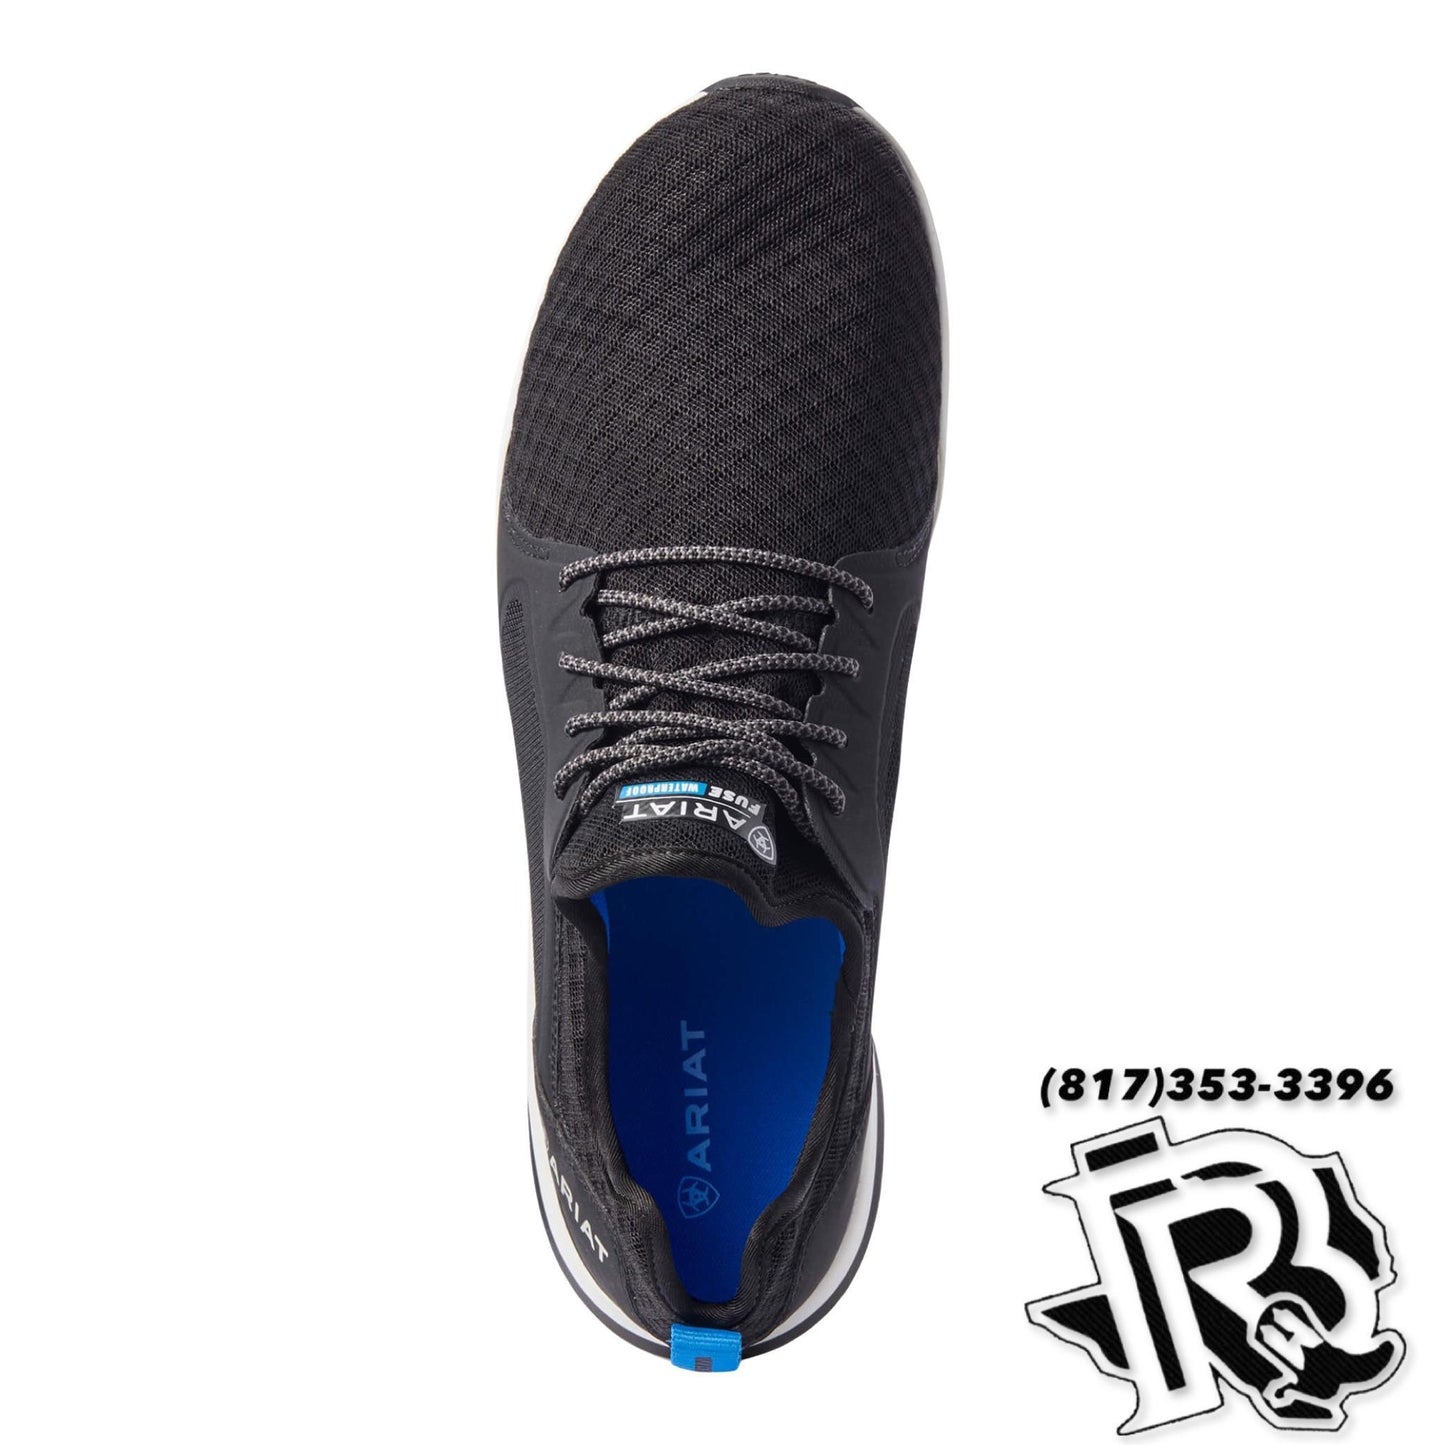 ARIAT SHOE | Men's Fuse Waterproof Shoes